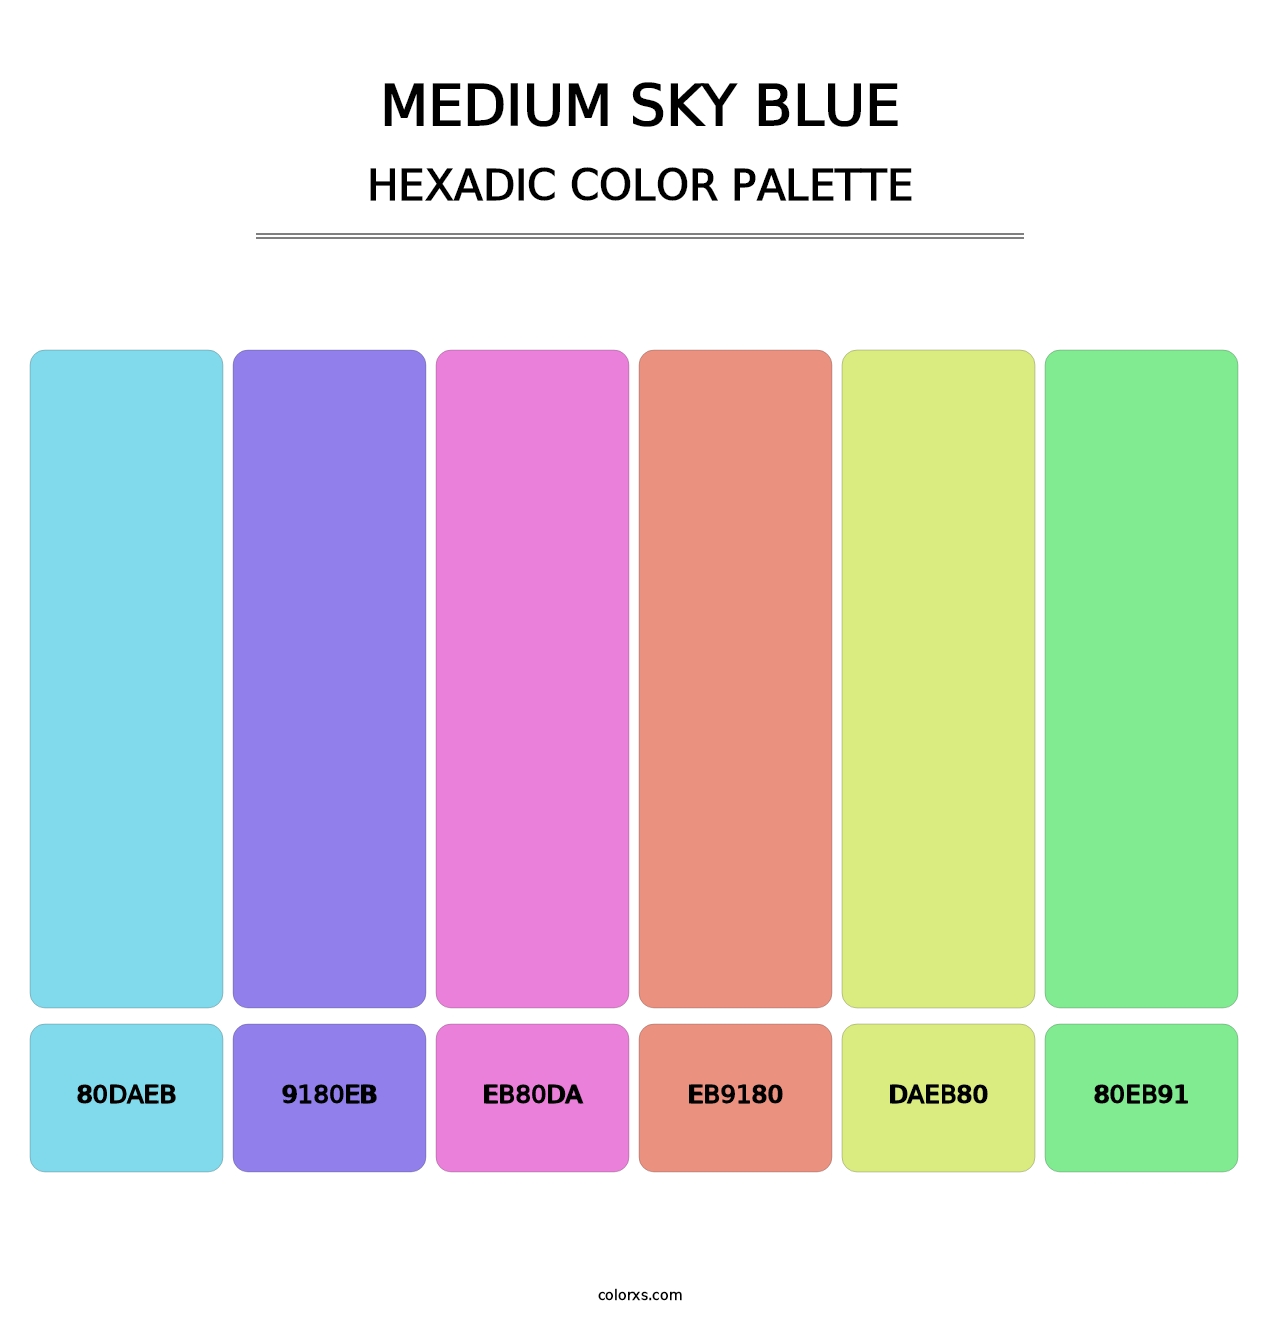 Medium Sky Blue - Hexadic Color Palette